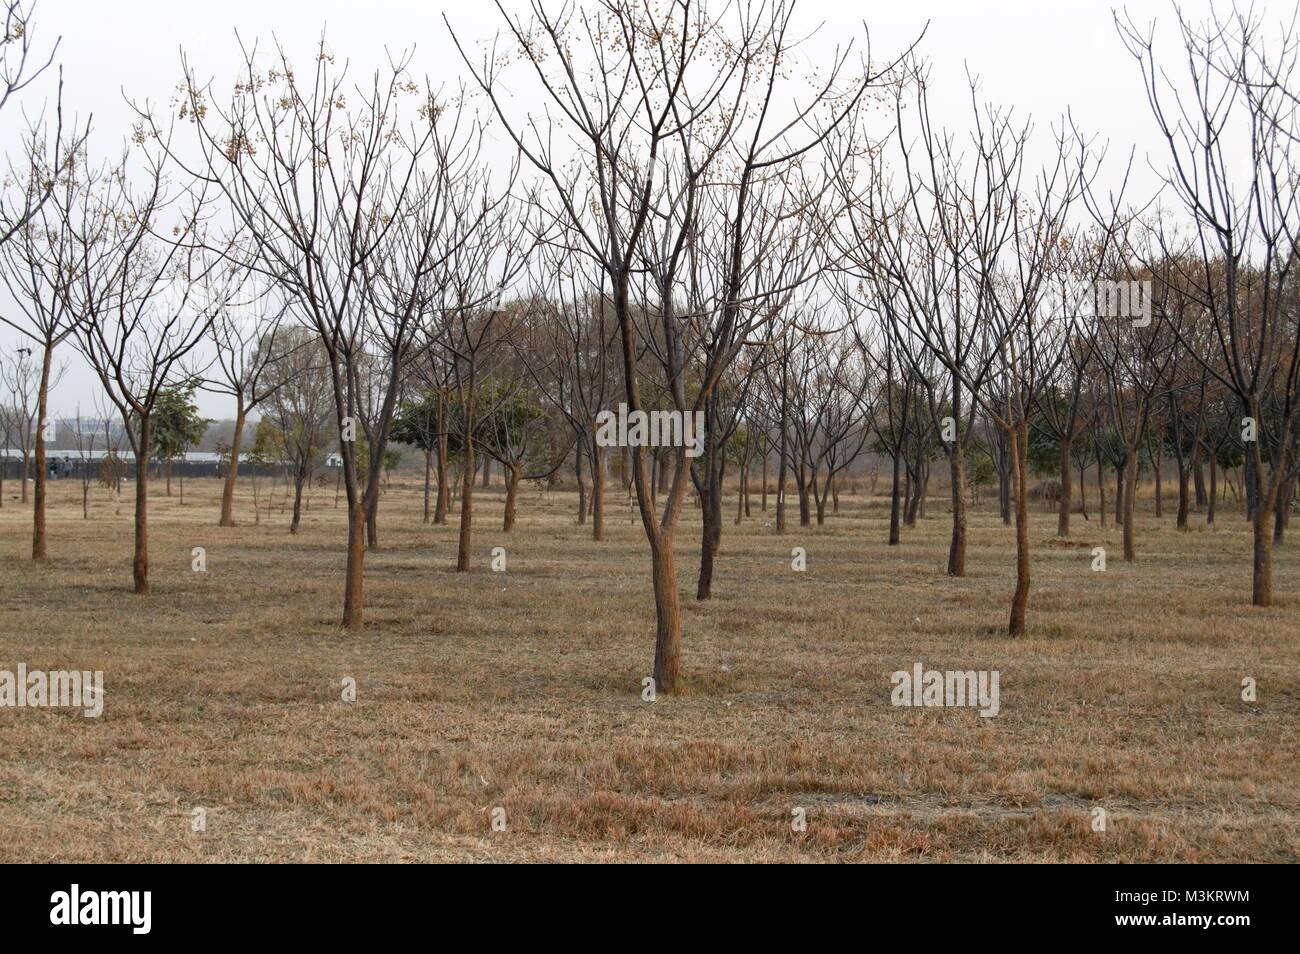 A beautiful shot taken at fatima jinnah park islamabad. Dry season waiting for winter rains. Stock Photo